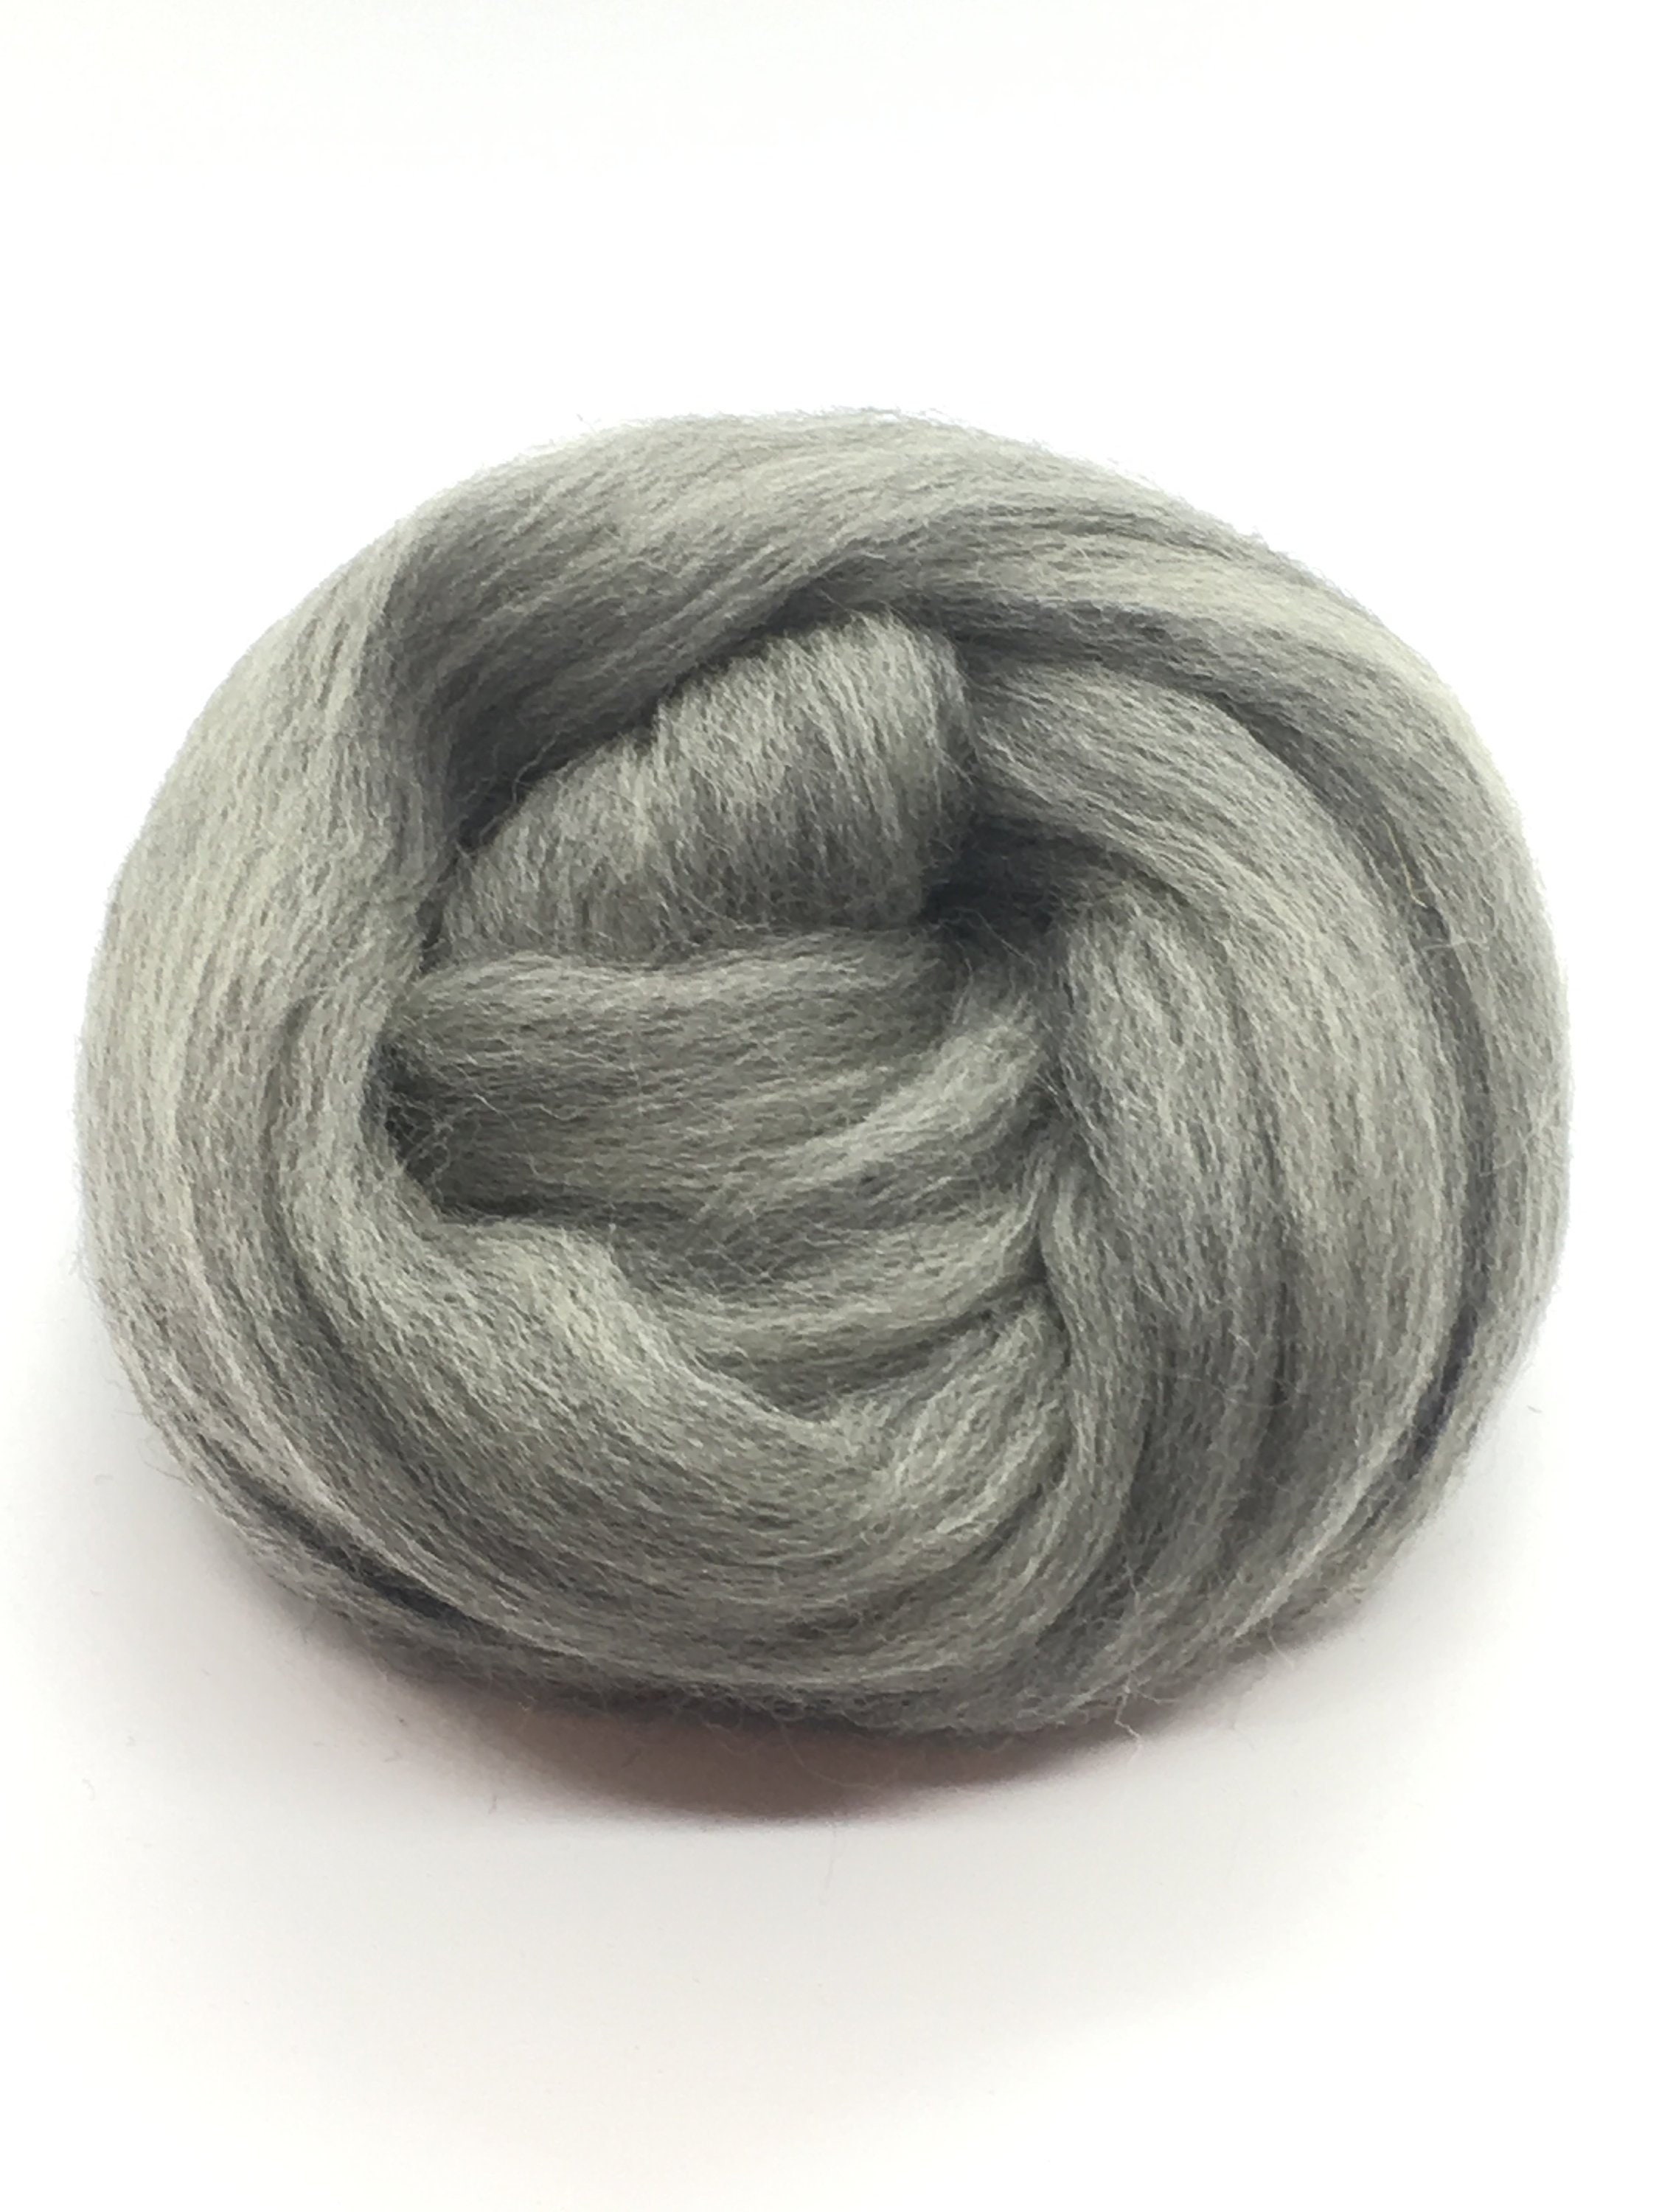 Gray Blend Wool Roving, Spinning Merino 23 Micron Australian Top Roving Fiber Spinning, Spin Into Yarn, Doll Hair